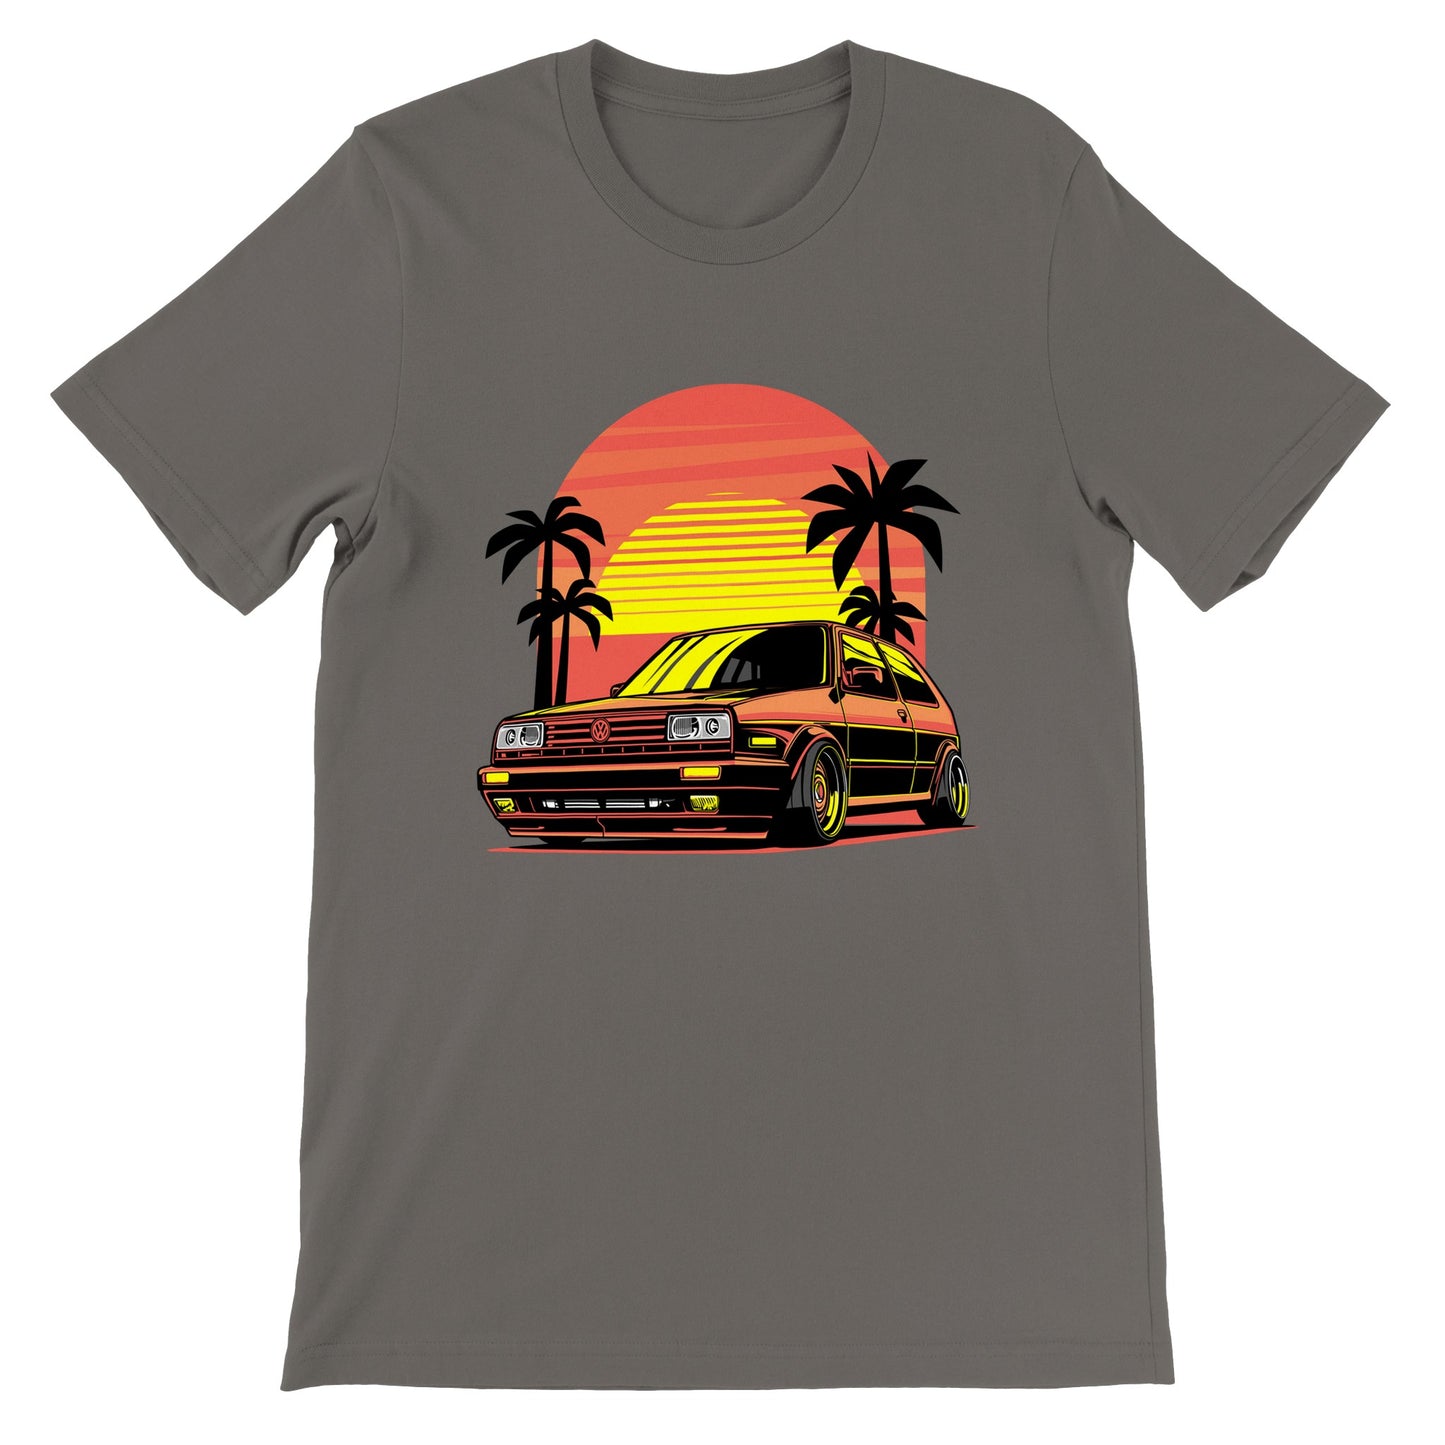 Car T-shirt - VW Golf California Sunset Artwork - Premium Unisex T-shirt 